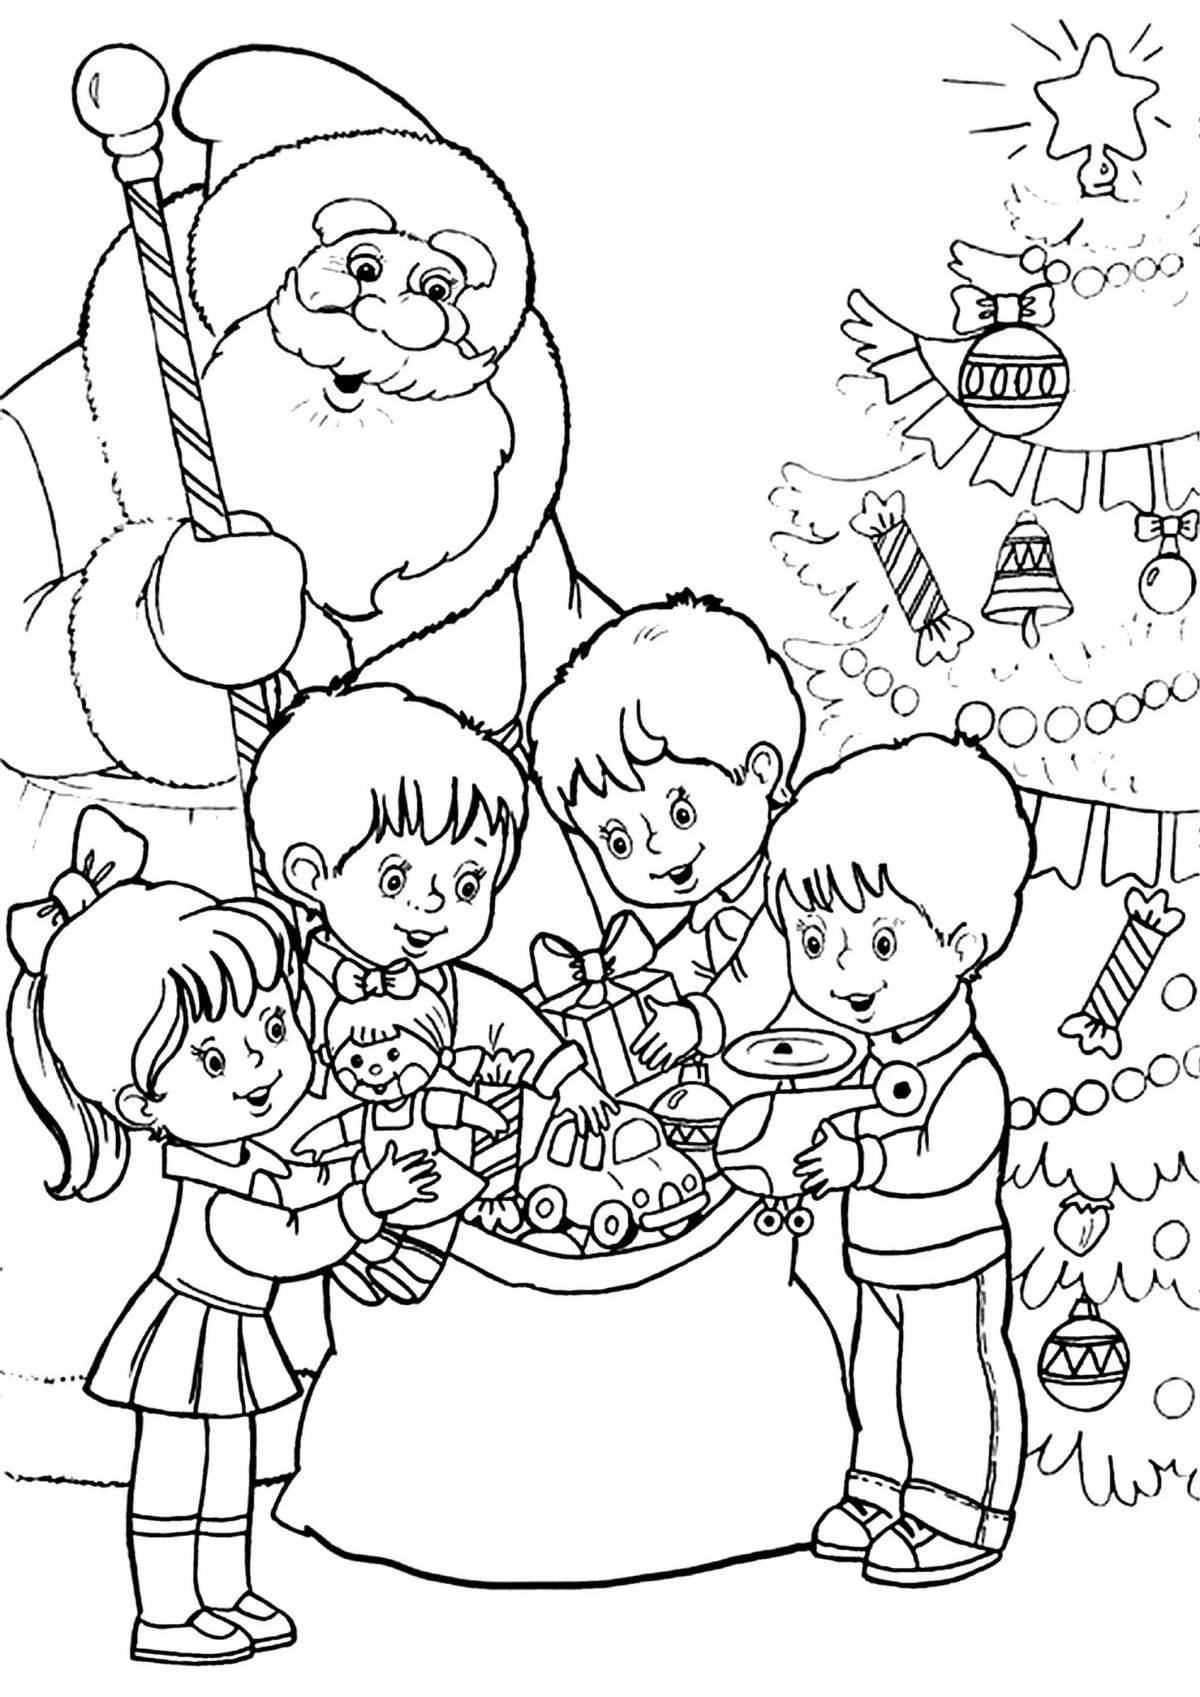 Festive Christmas drawing